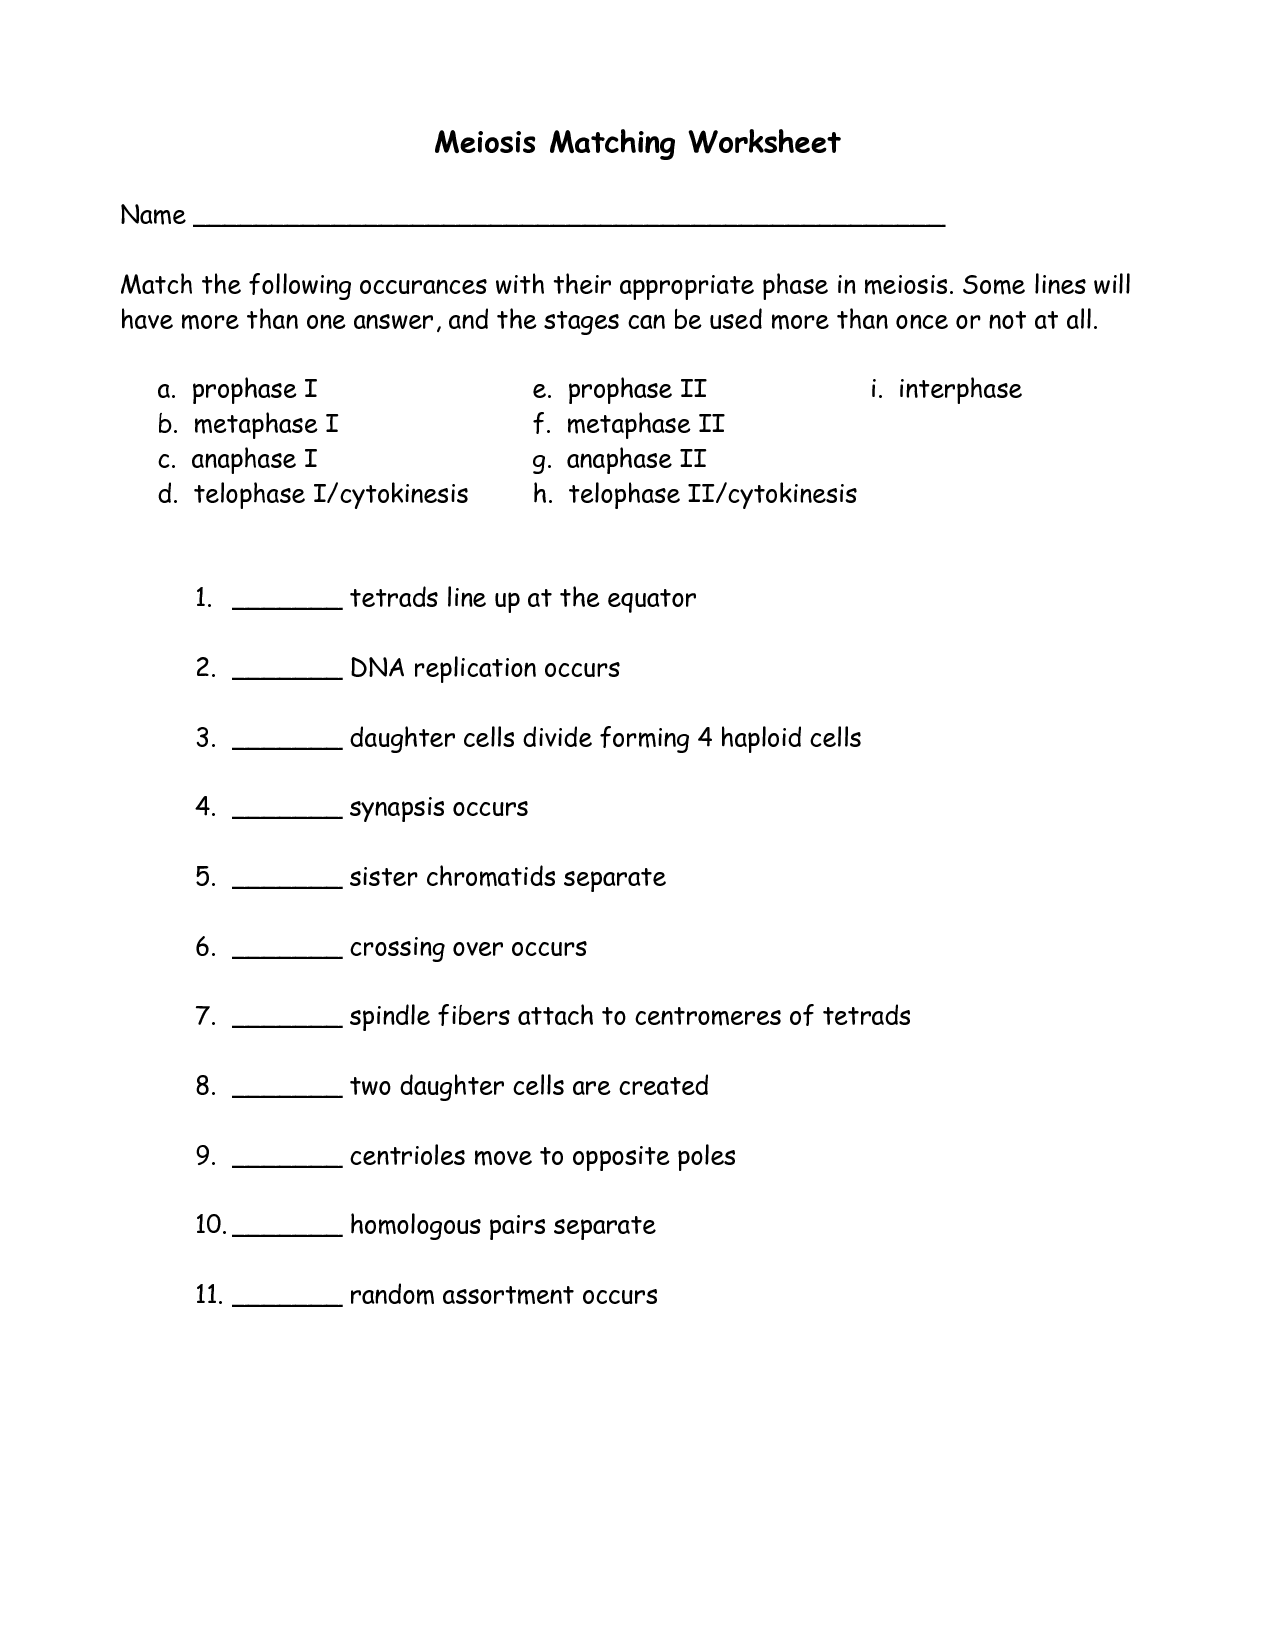 Meiosis Matching Worksheet Answer Key Image